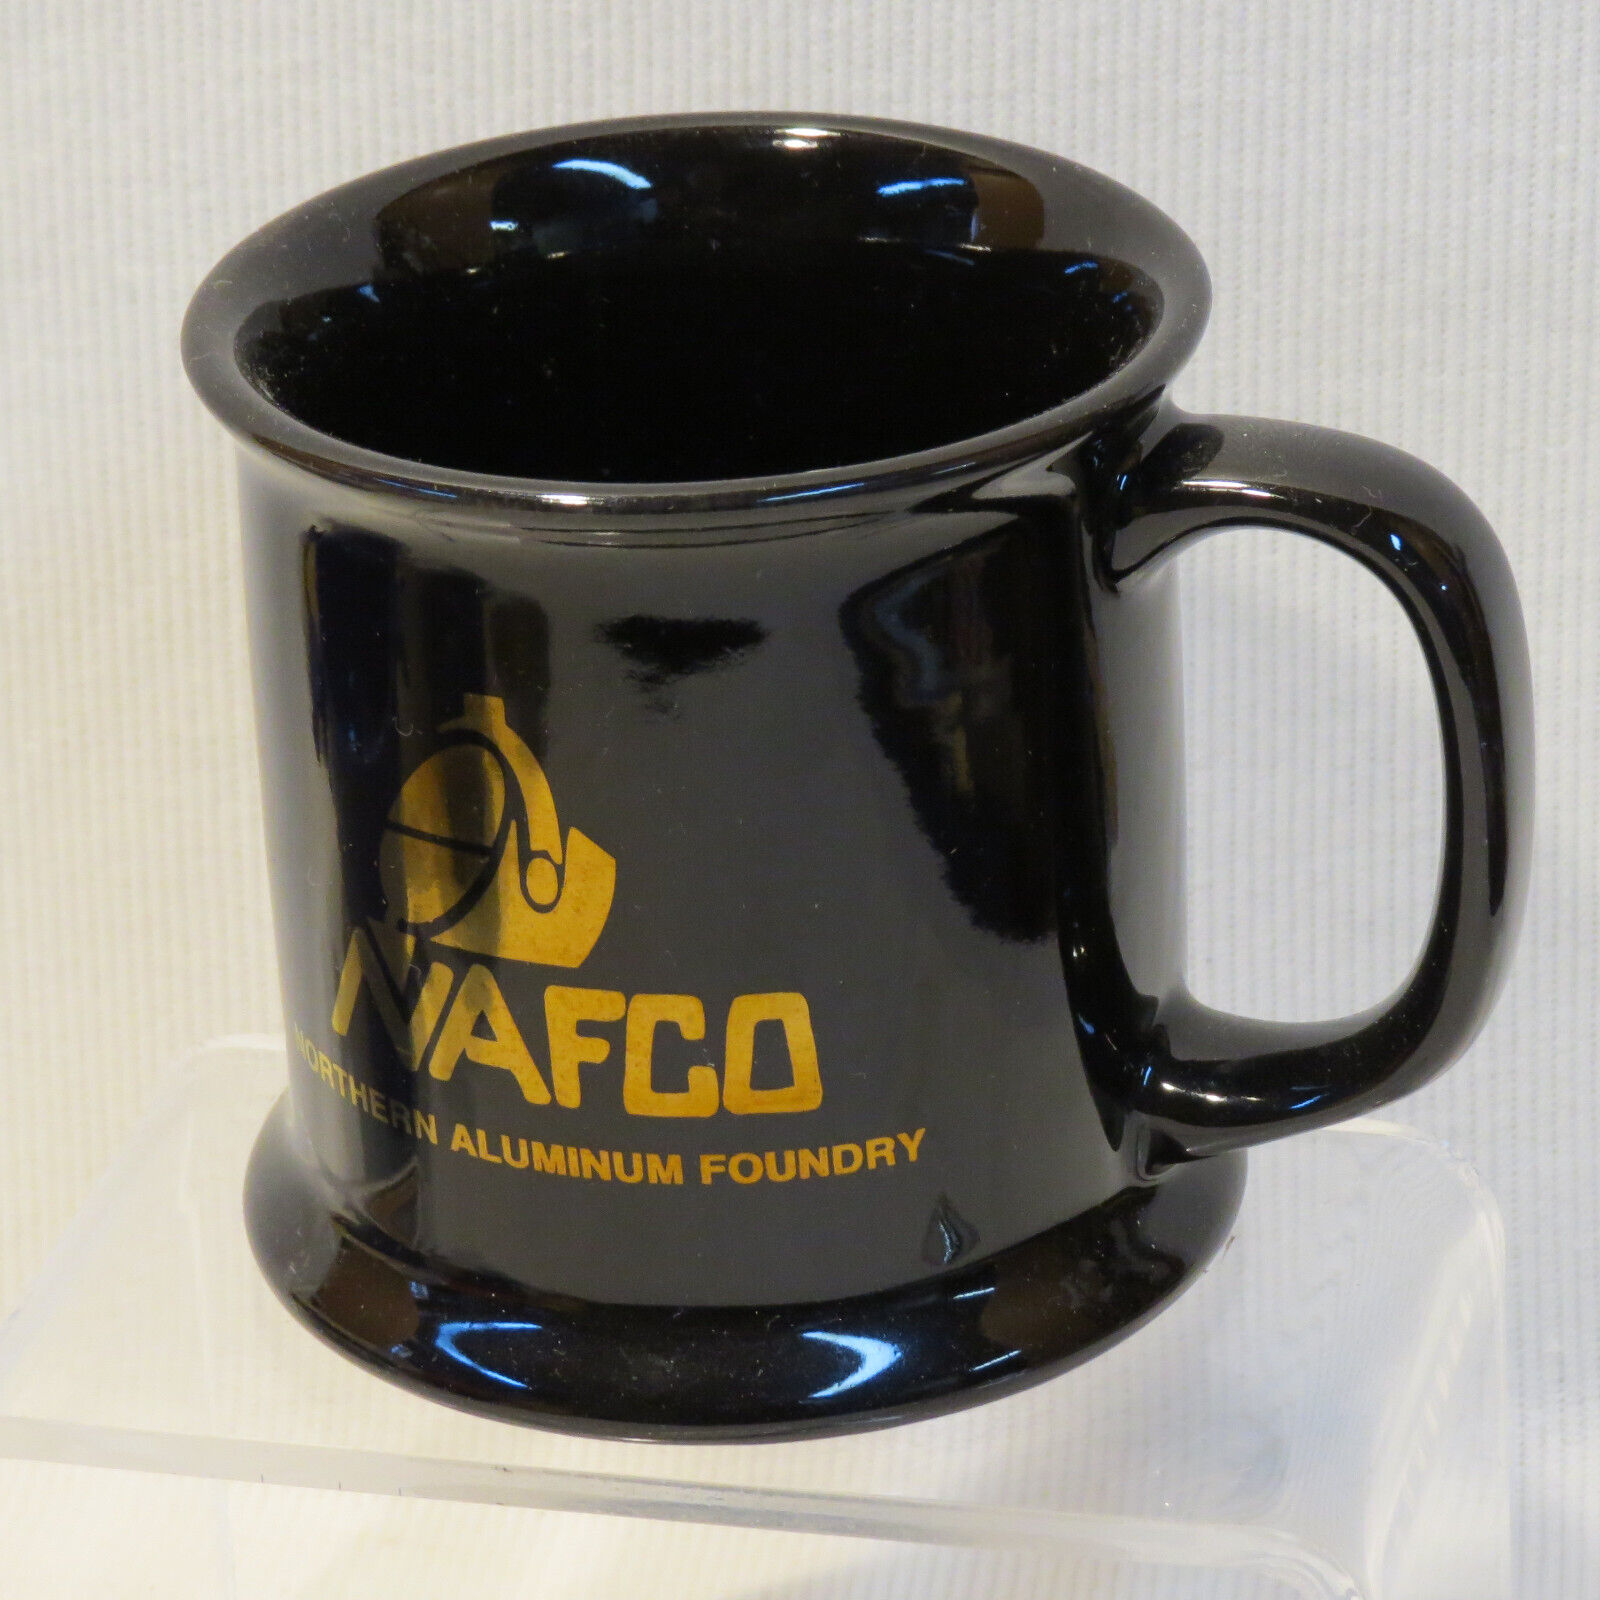 Vintage Coffee Mug Advertising Northern Aluminum Foundry NAFCO, Fond Du Lac, WI